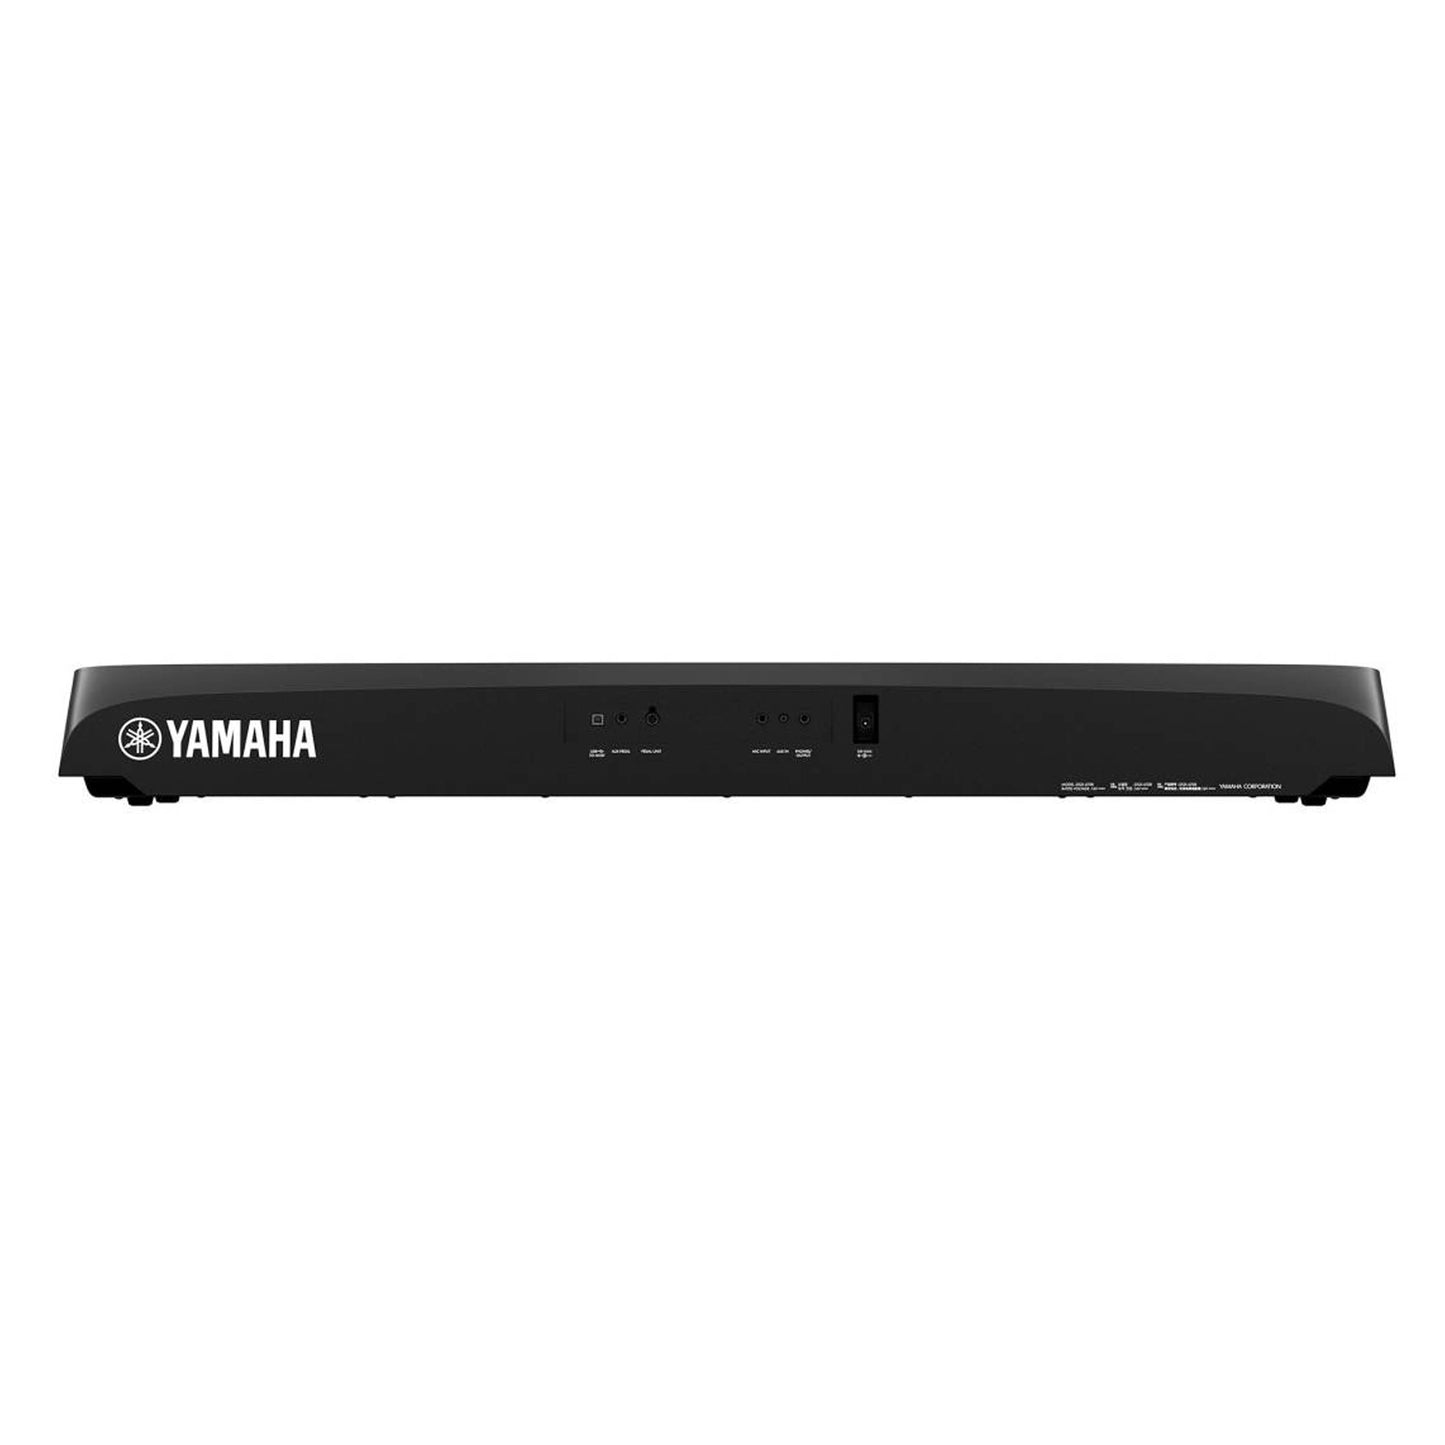 Yamaha DGX670 88-Key Digital Piano - Black